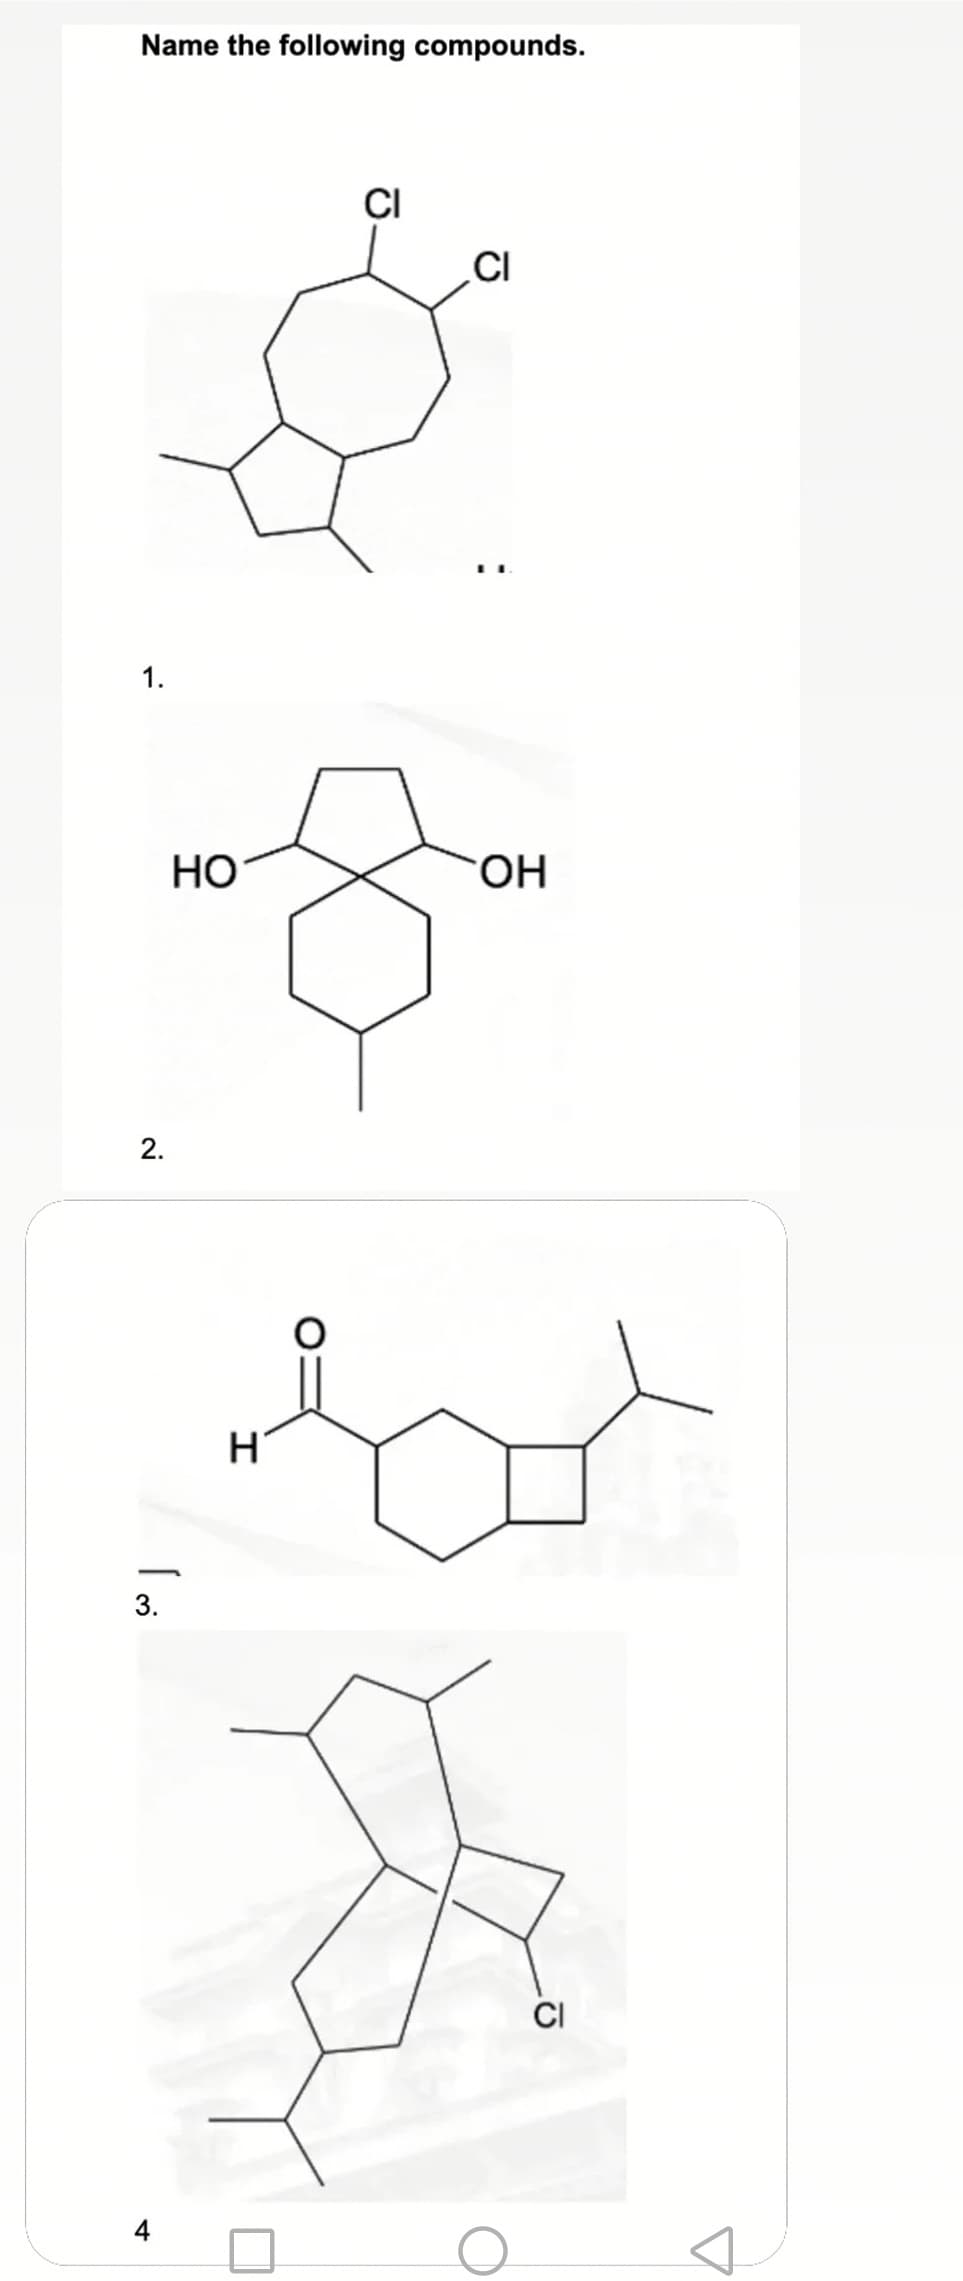 Name the following compounds.
1.
2.
3.
4
HO
H
CI
CI
OH
201
CI